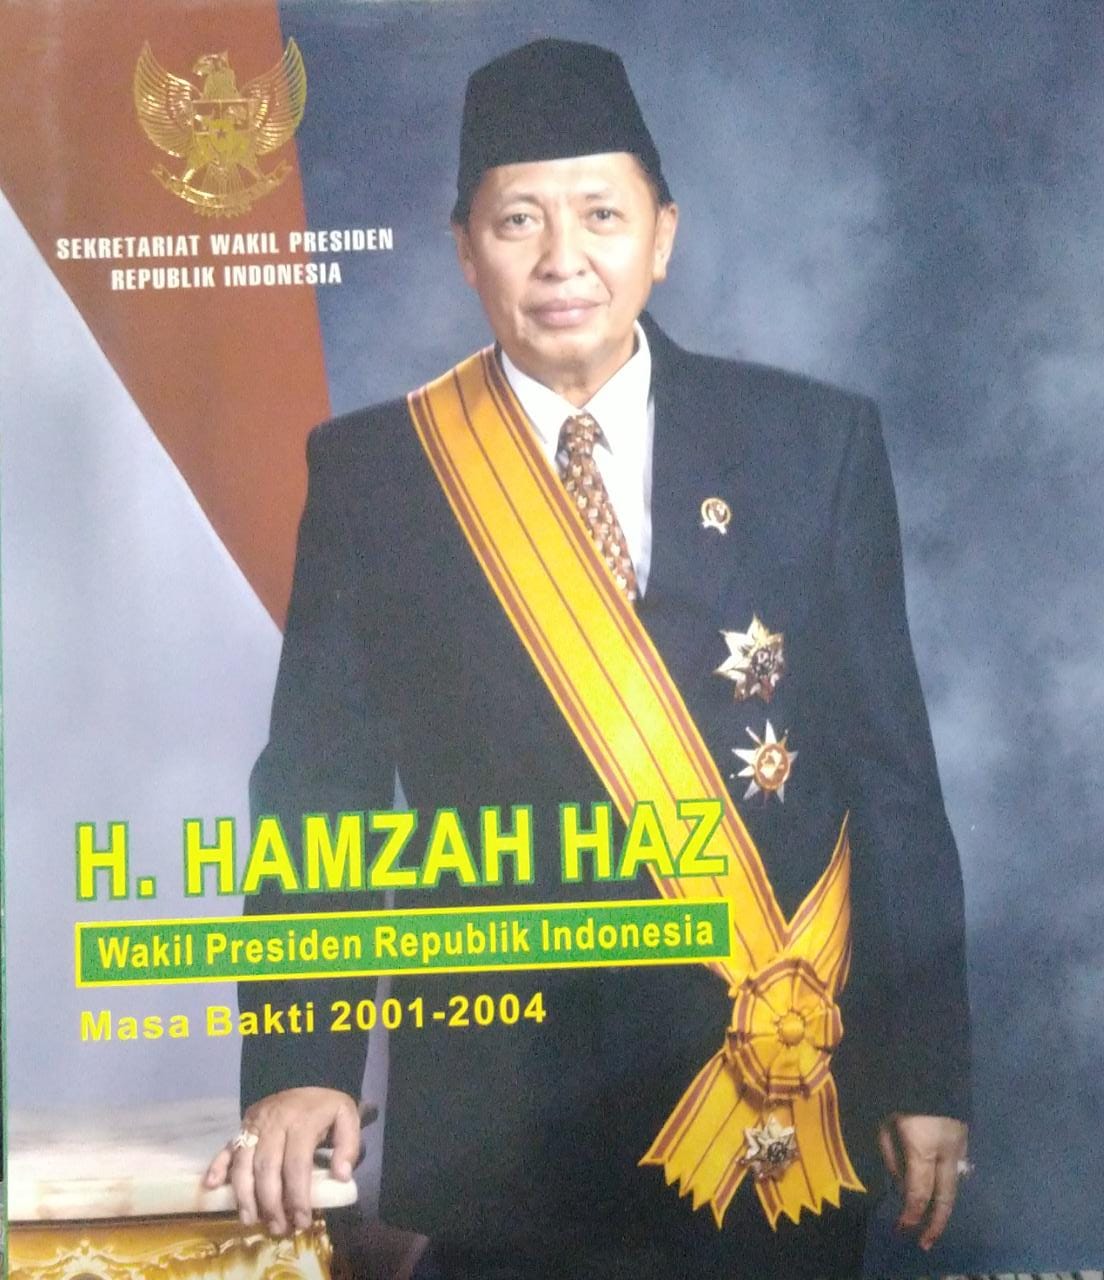 H. hamzah haz wakil presiden republik indonesia masa bakti 2001-2004